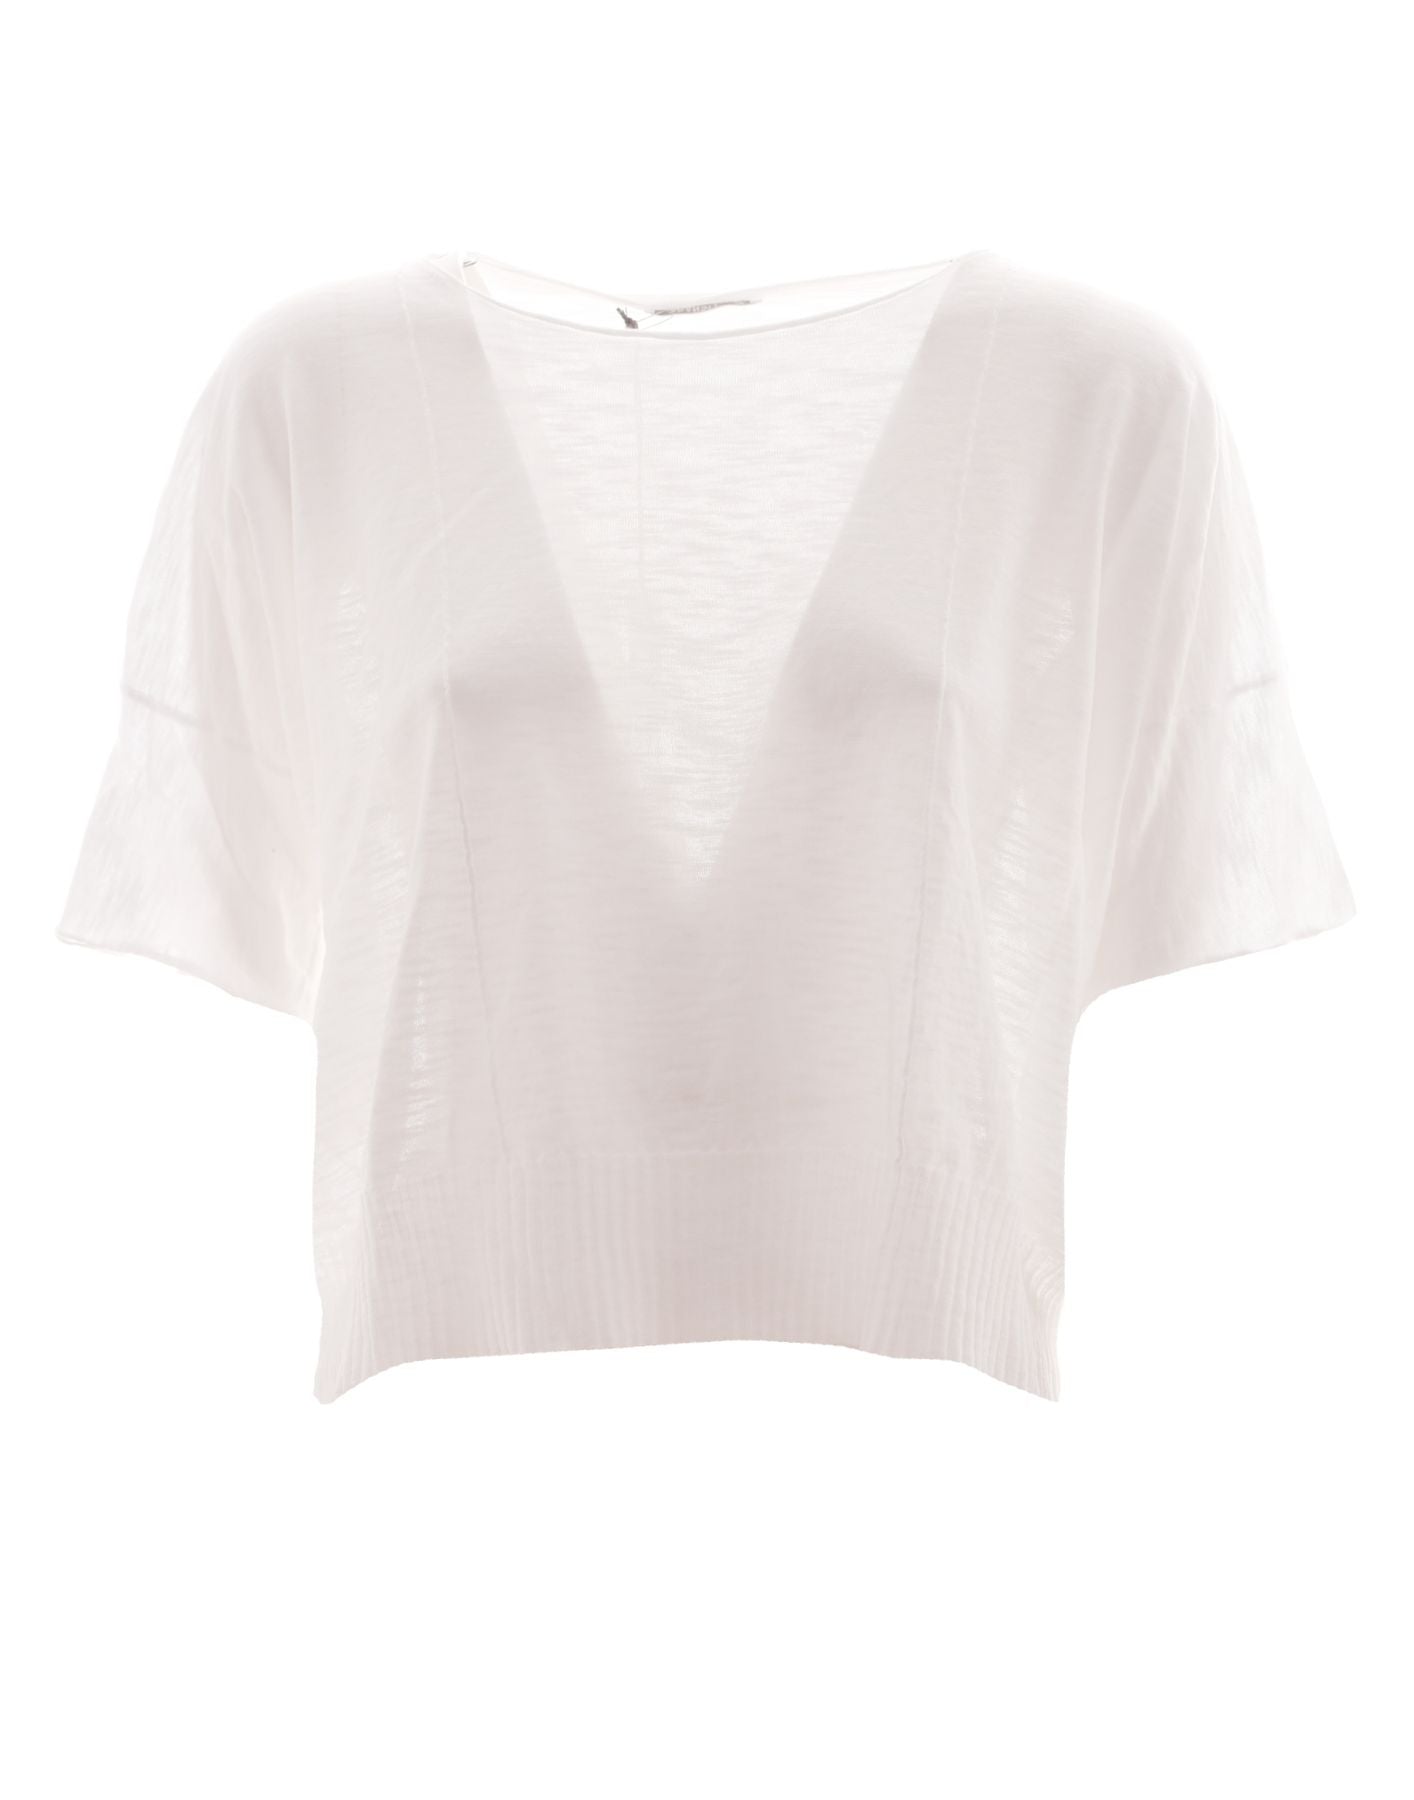 T-shirt for woman CFDTRW5403 00 WHITE TRANSIT